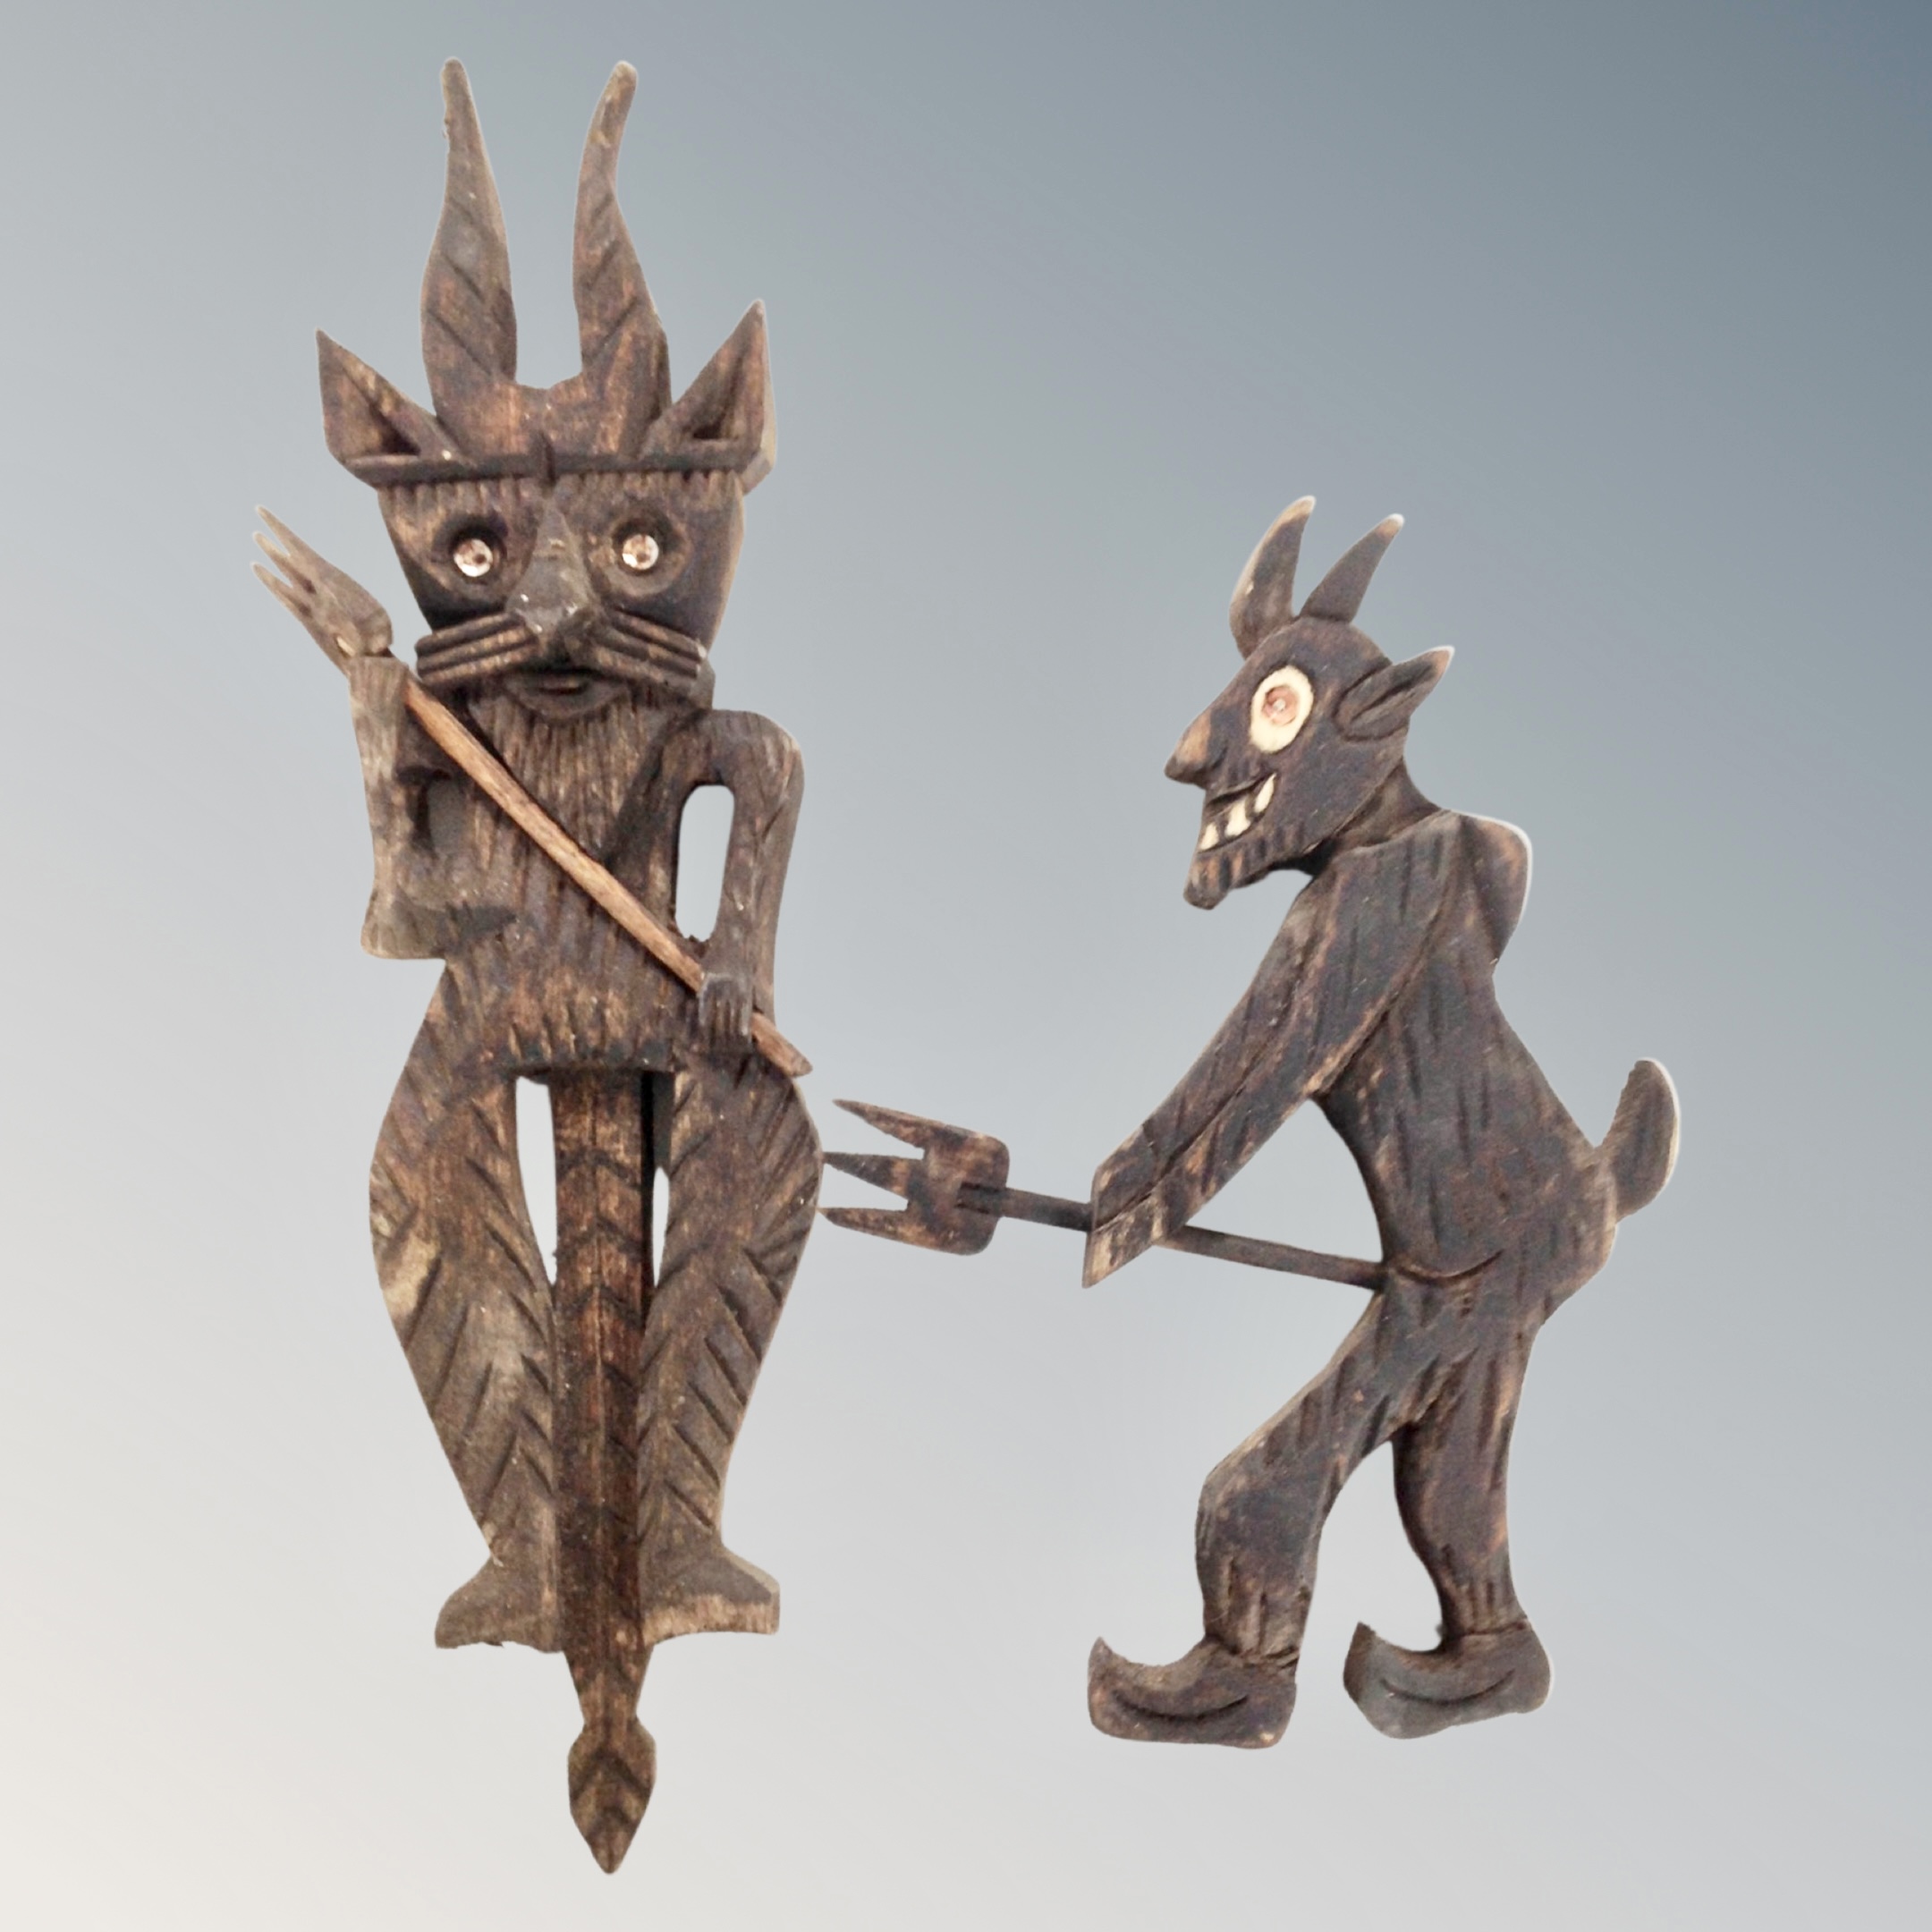 Two carved wooden devil figures